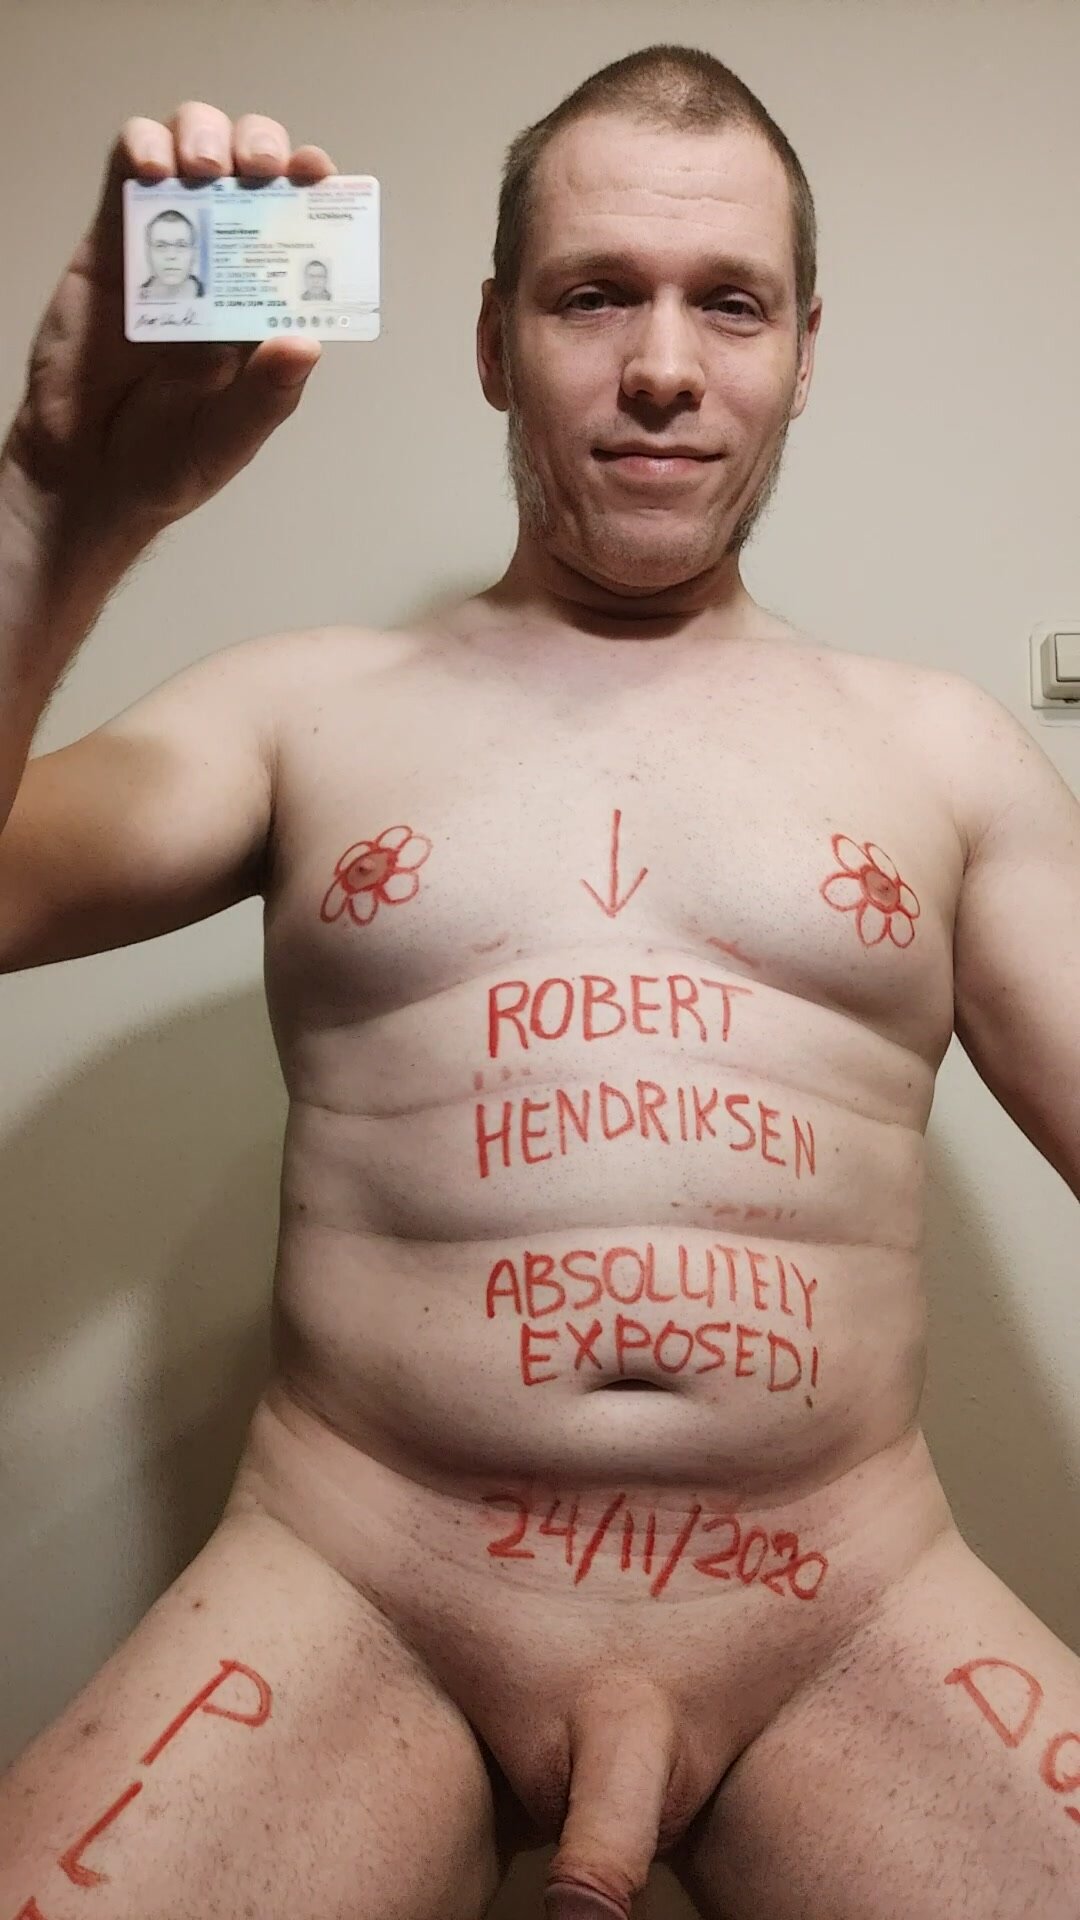 Robert Hendriksen 24/11/2020 Exposed